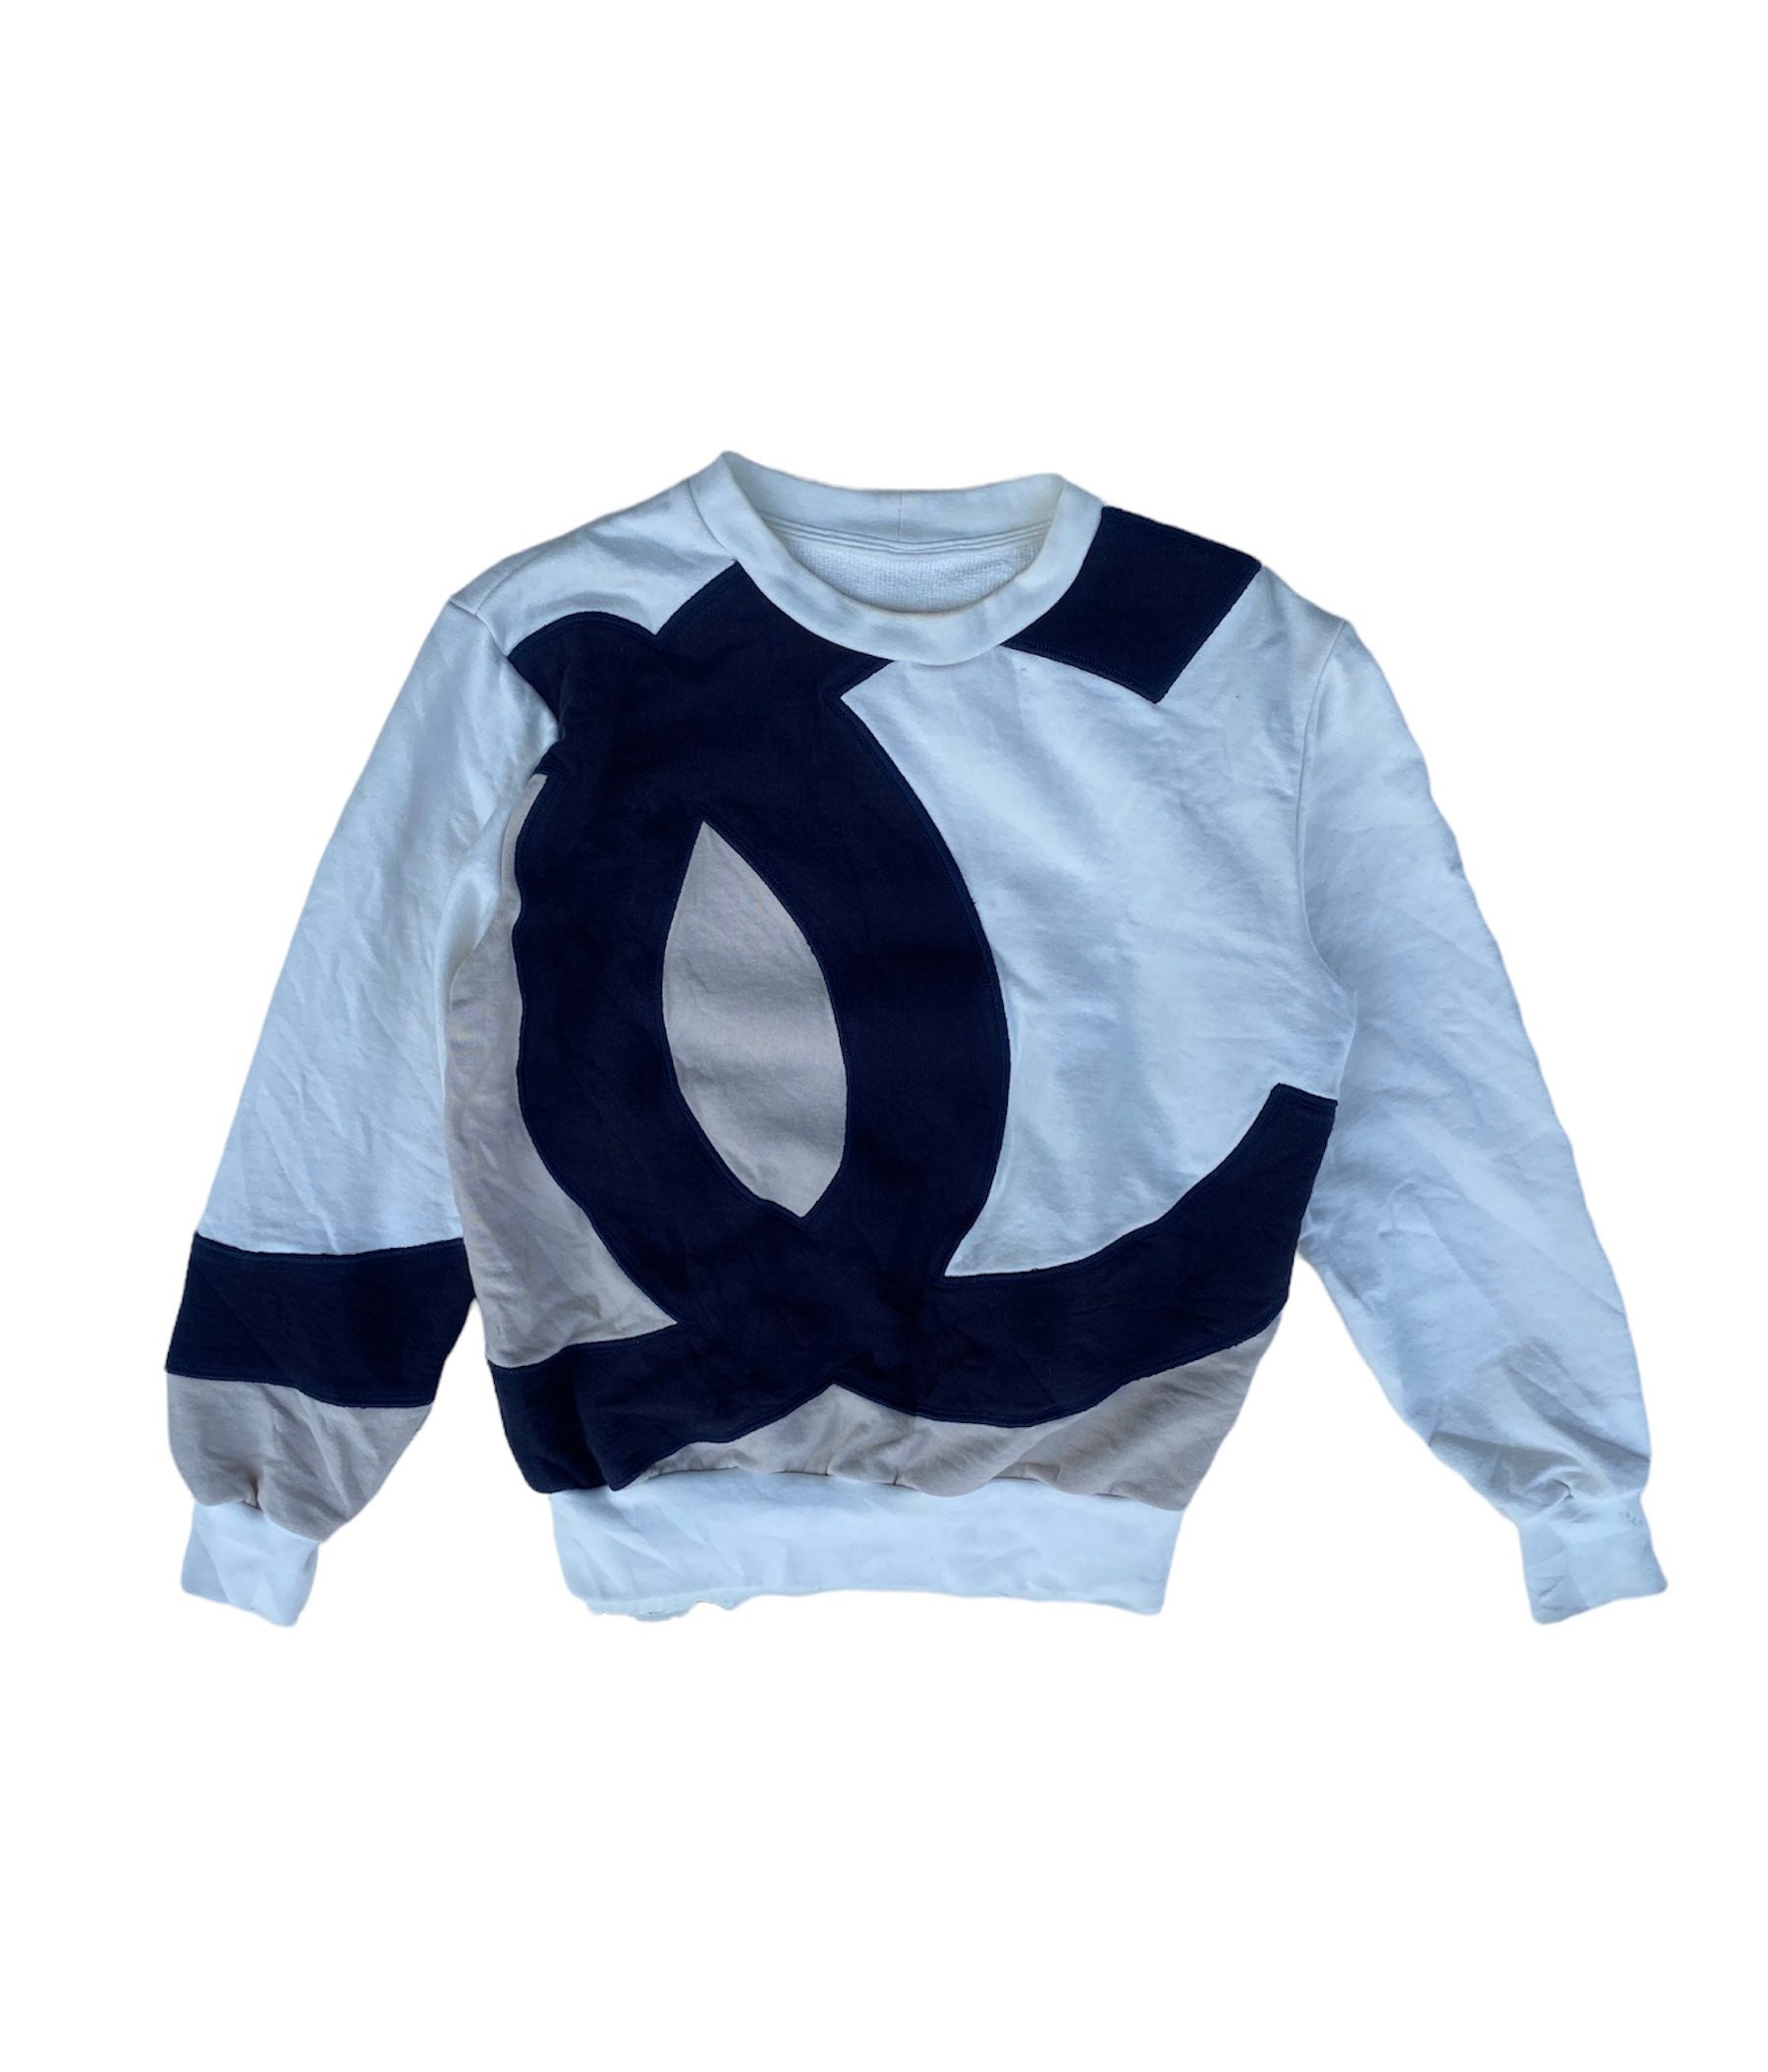 Chanel Logo Sweater - Etsy